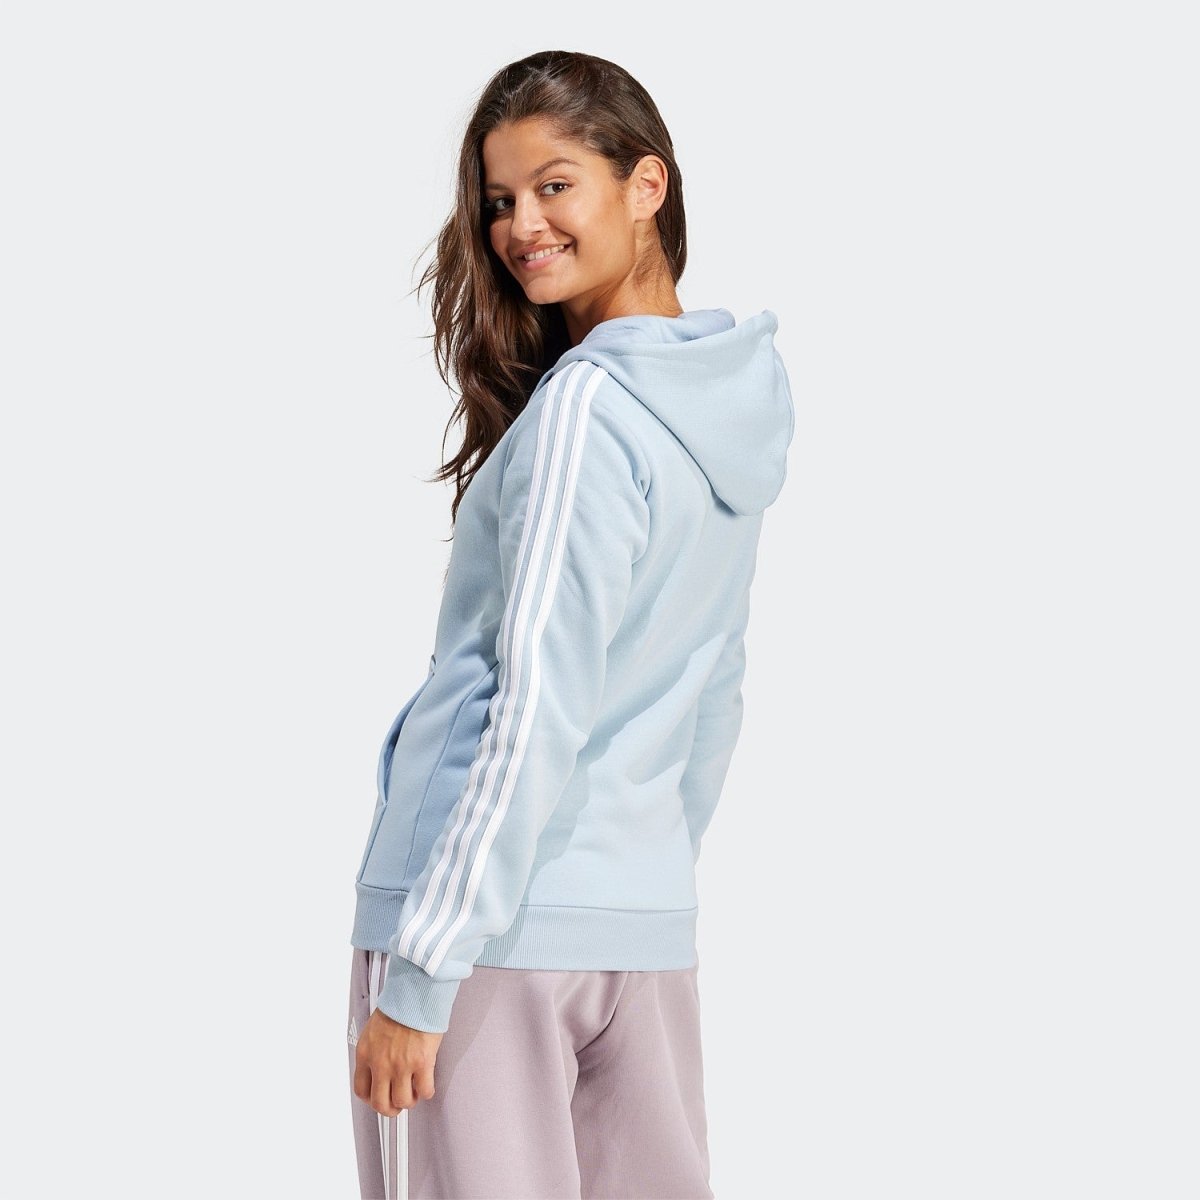 Adidas ADIDAS WOMEN'S 3 Stripes BLUE JACKET - INSPORT